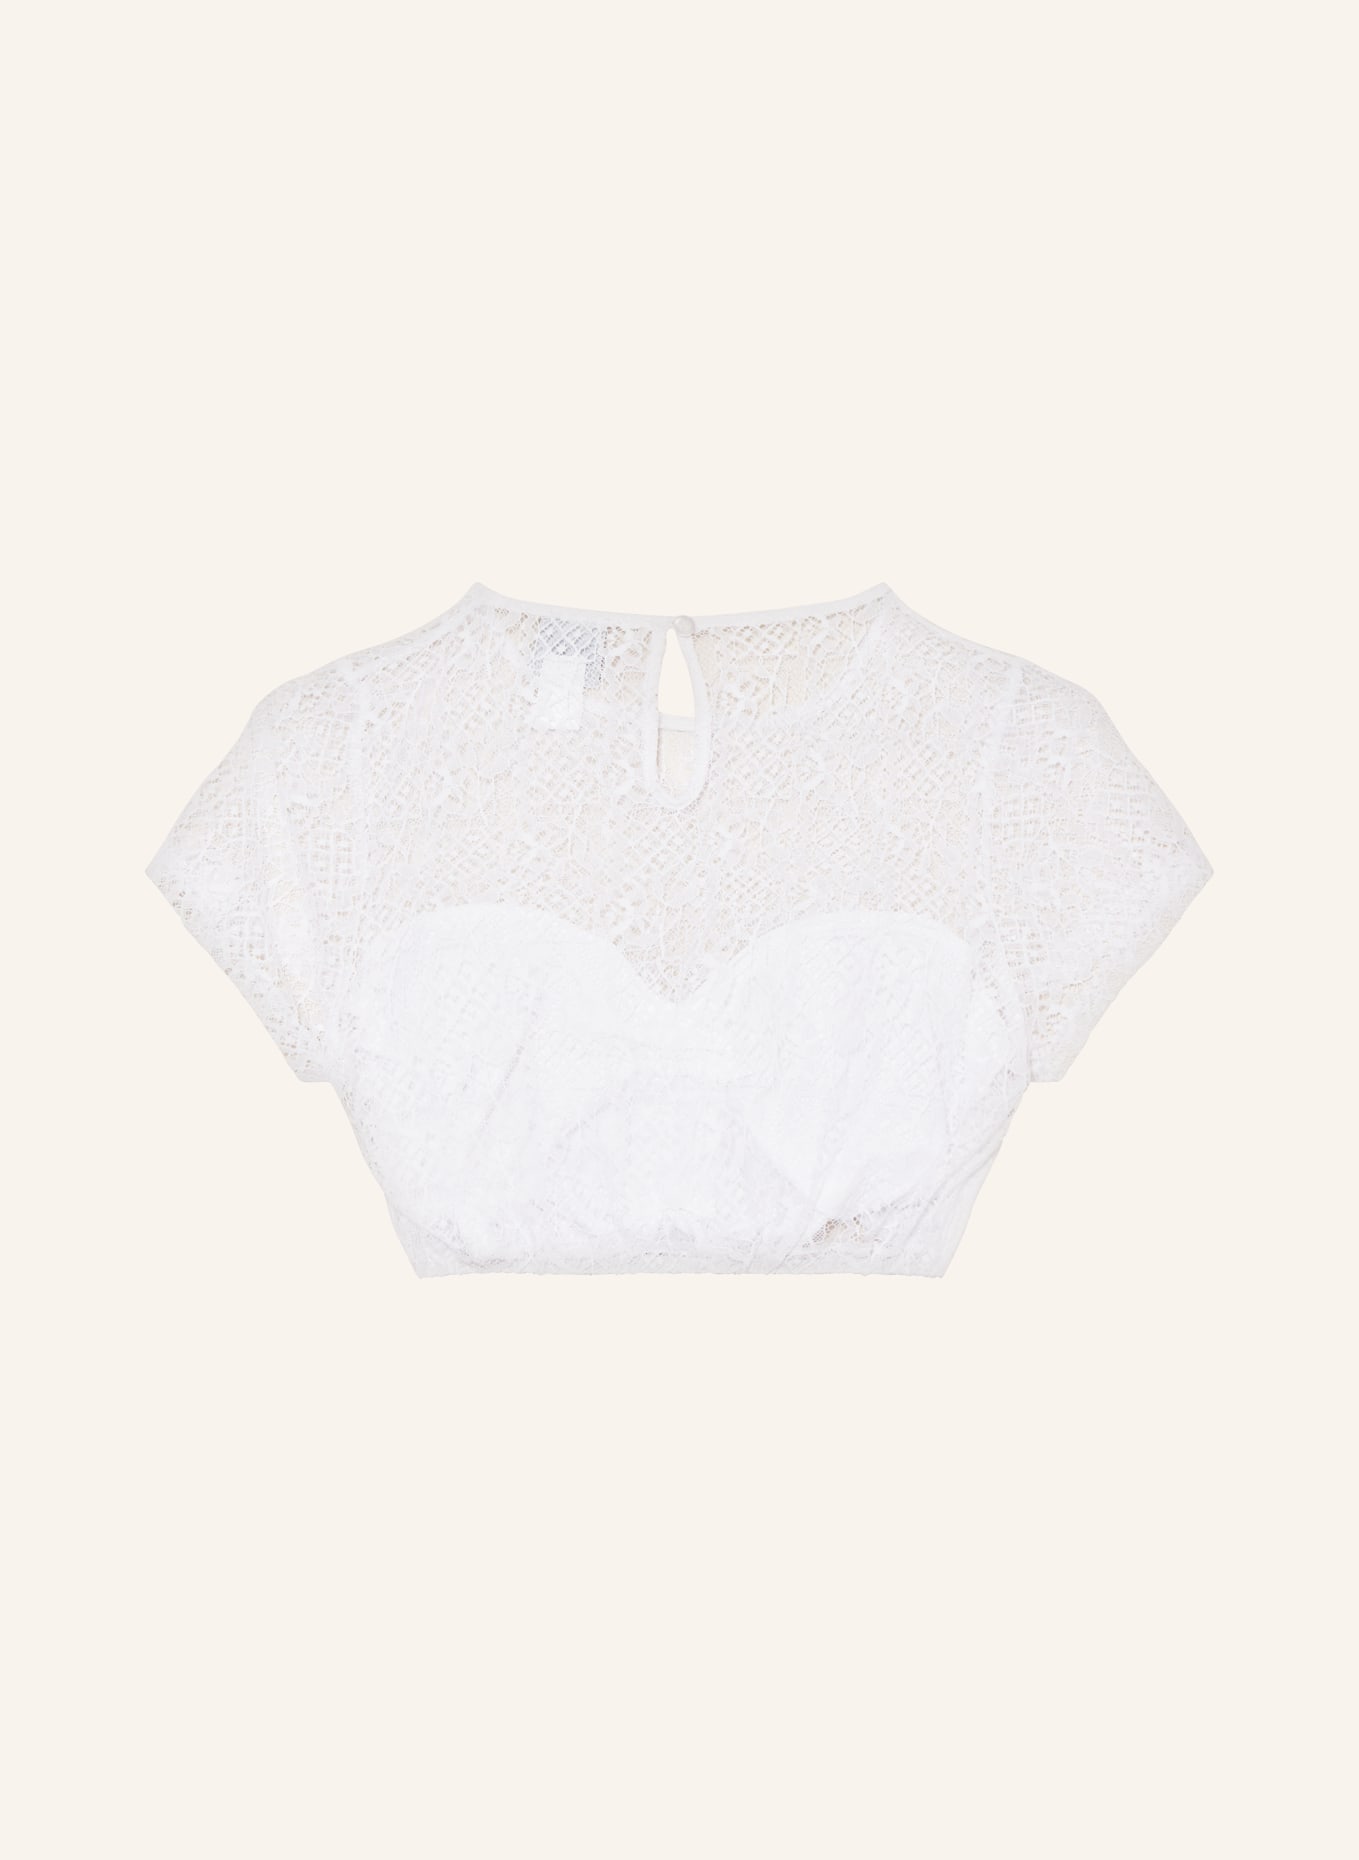 Hammerschmid Dirndl blouse DORLE in lace, Color: WHITE (Image 2)